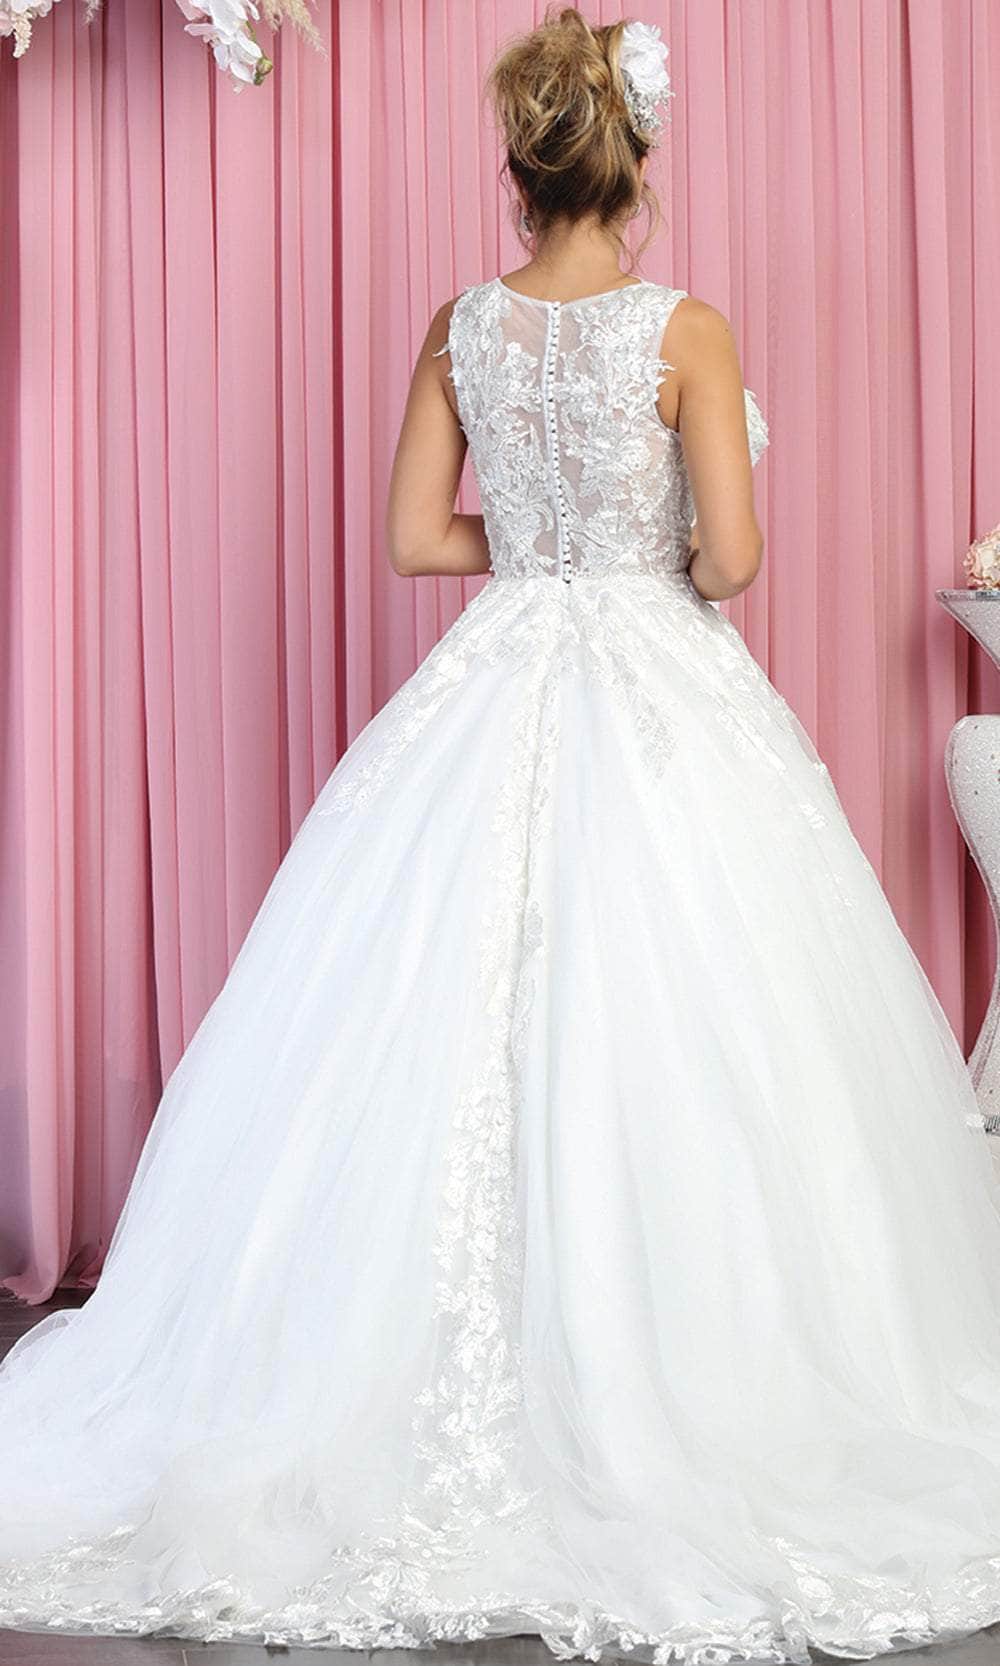 May Queen RQ7900 - Sleeveless Illusion Jewel Neckline Wedding Dress Wedding Dresses